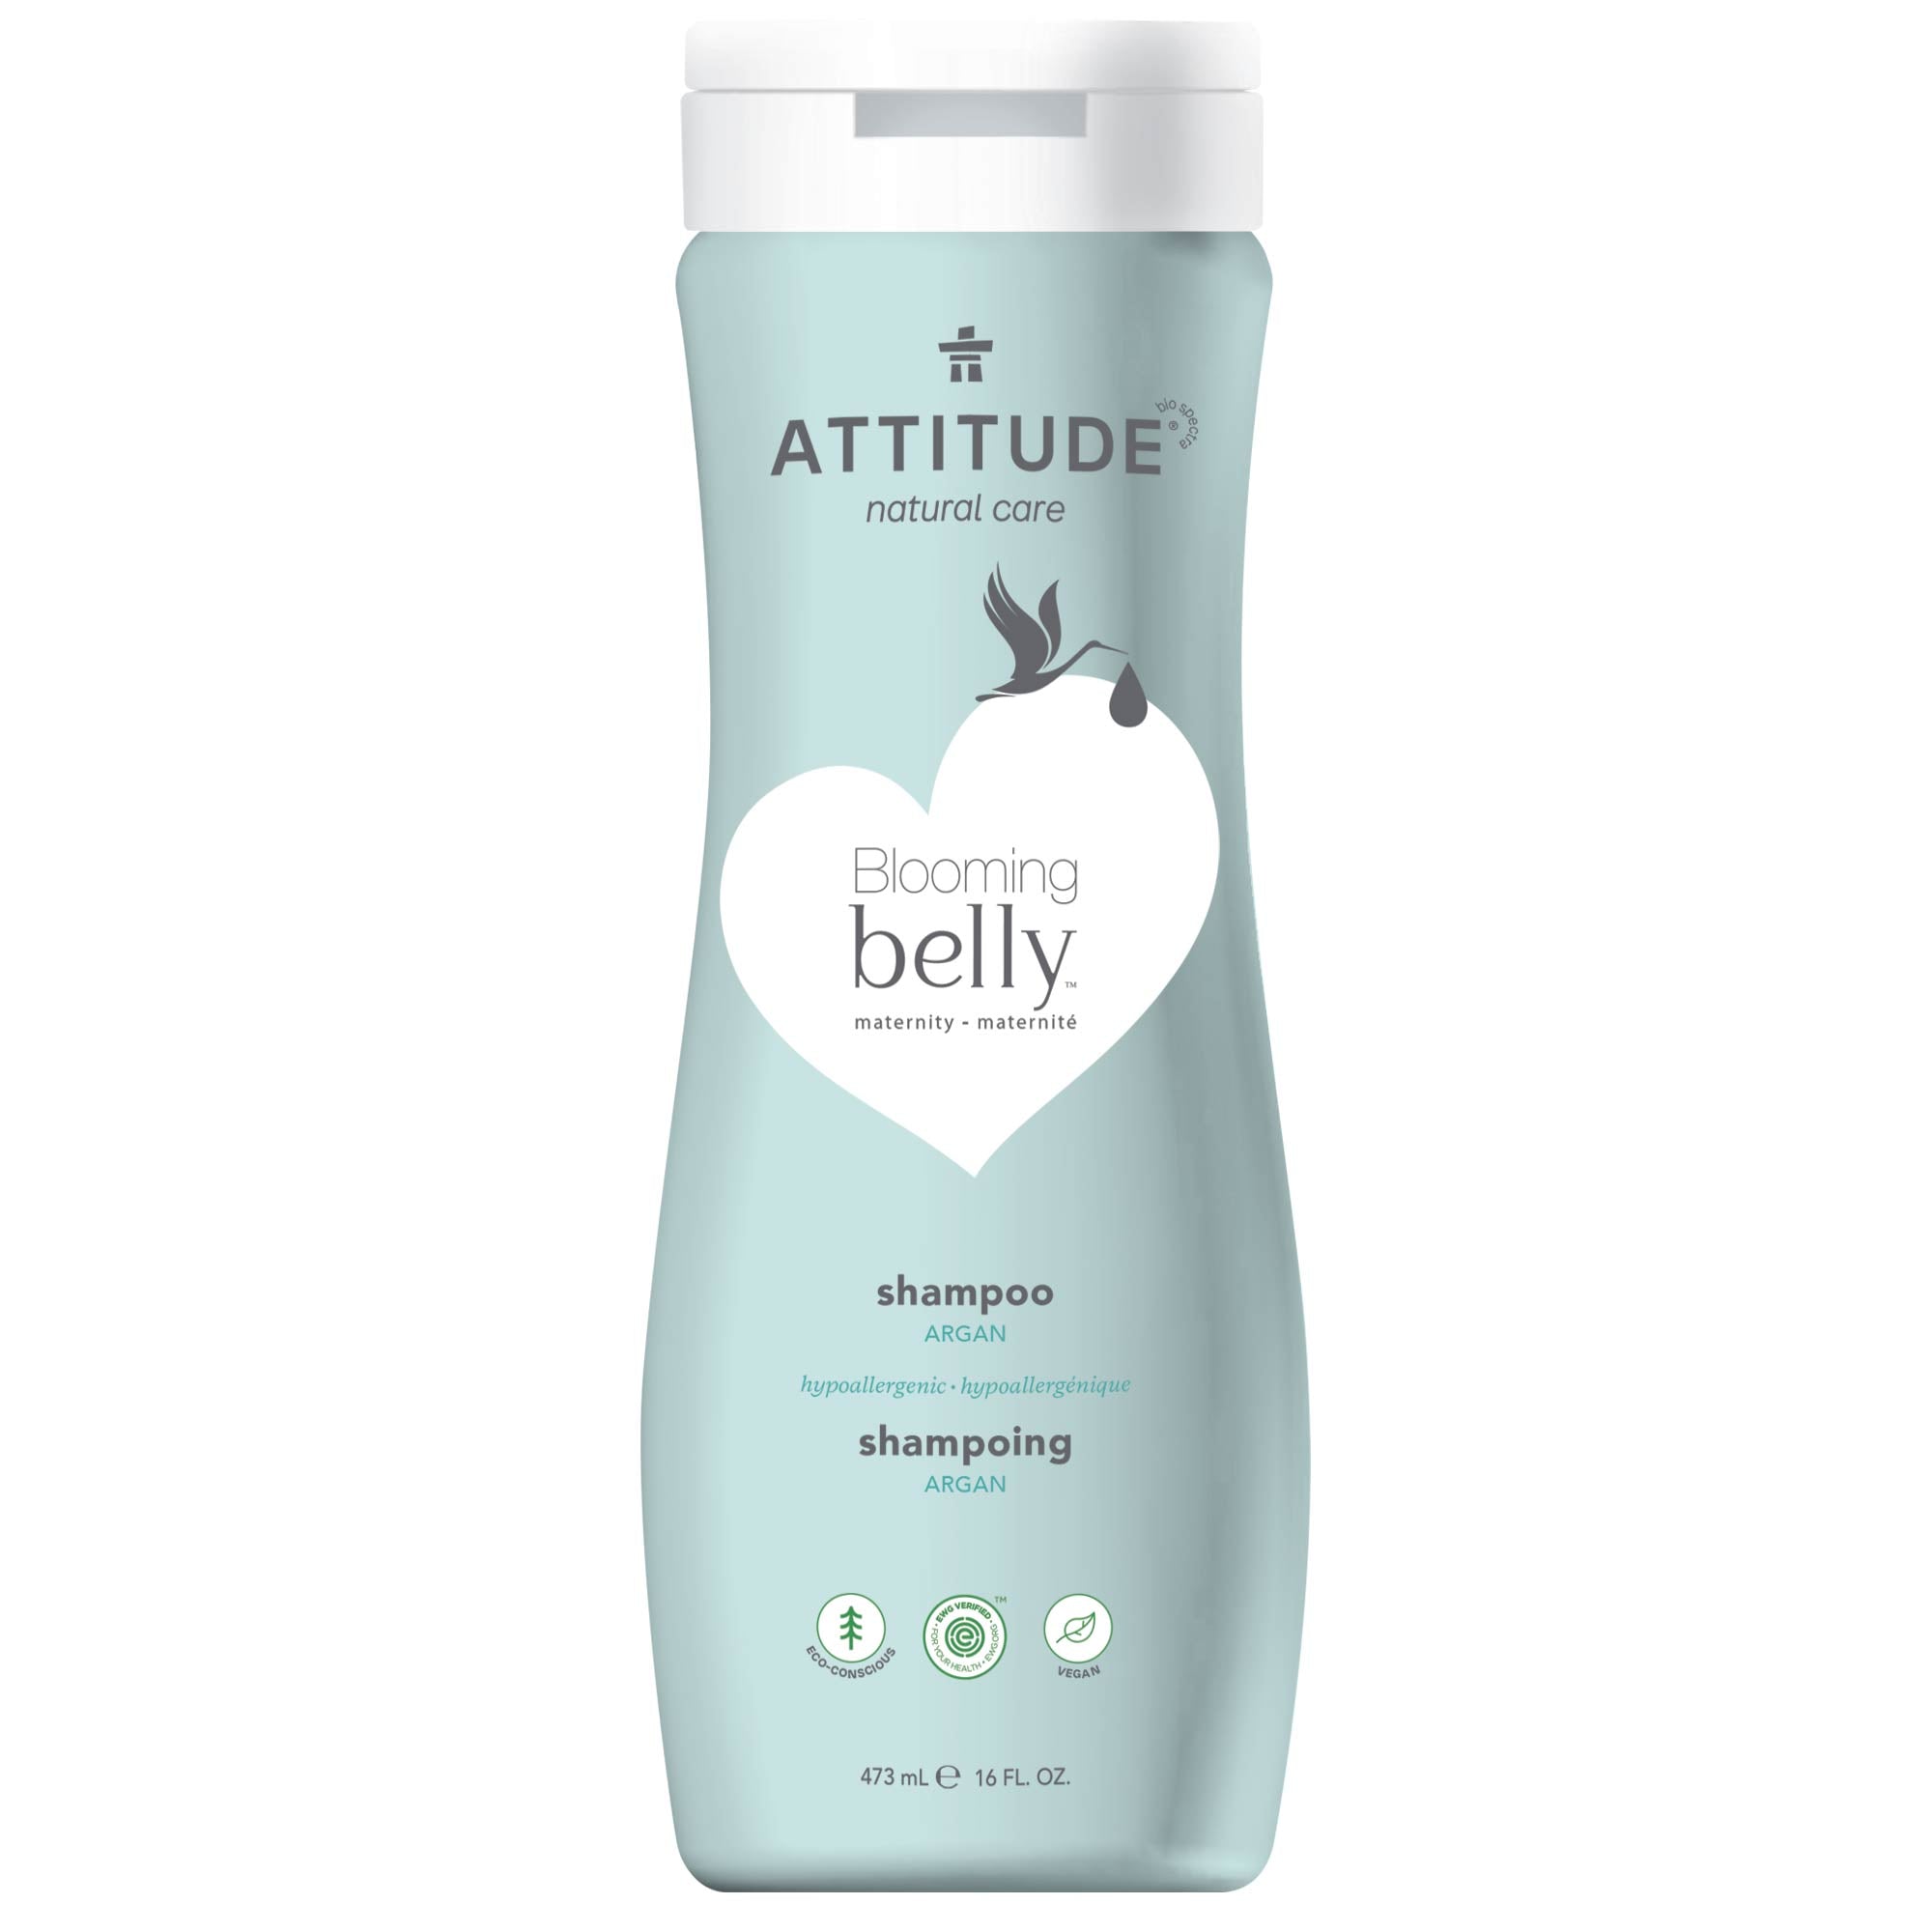 ATTITUDE Blooming belly™ Pregnancy Shampoo  Argan 11011_en?_main? 473 mL